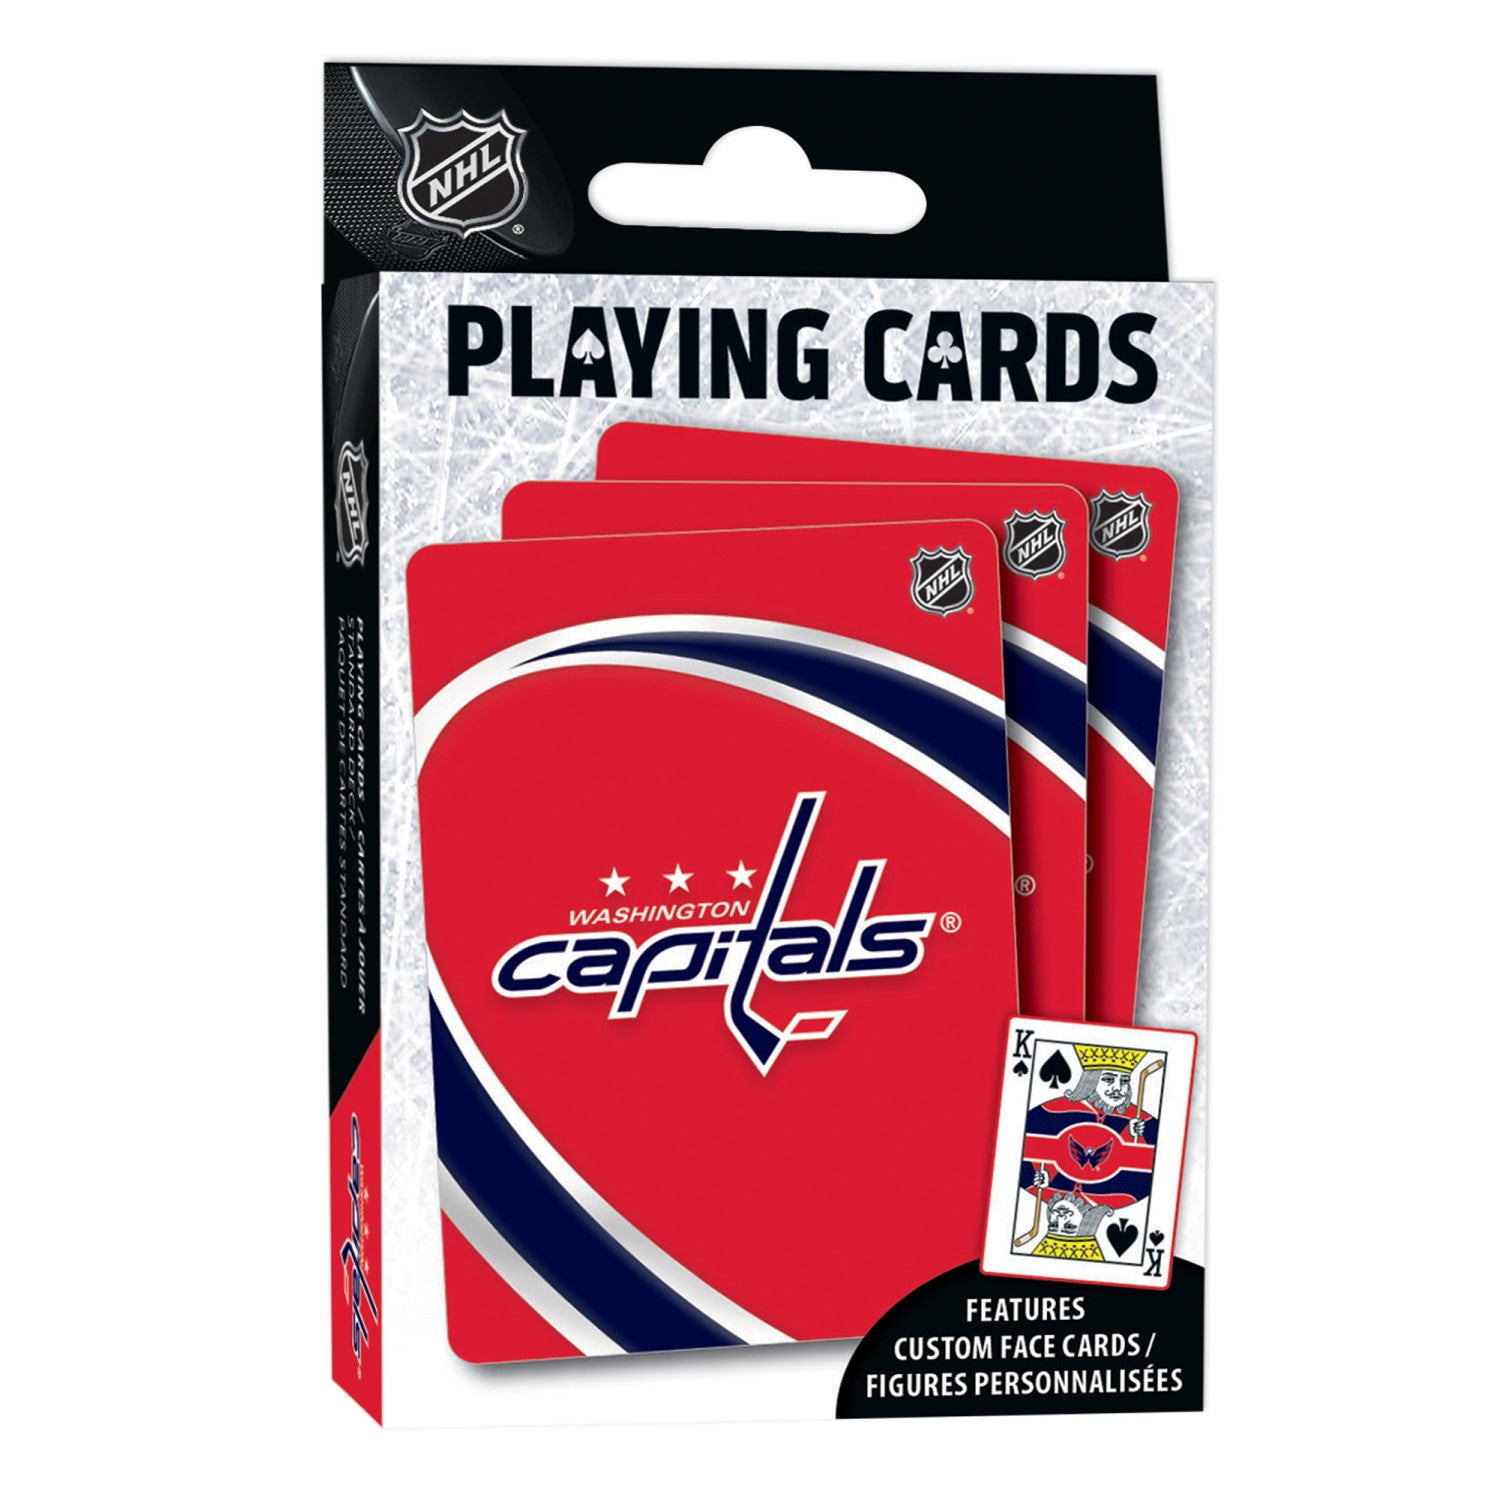 Washington Capitals Playing Cards - 54 Card Deck